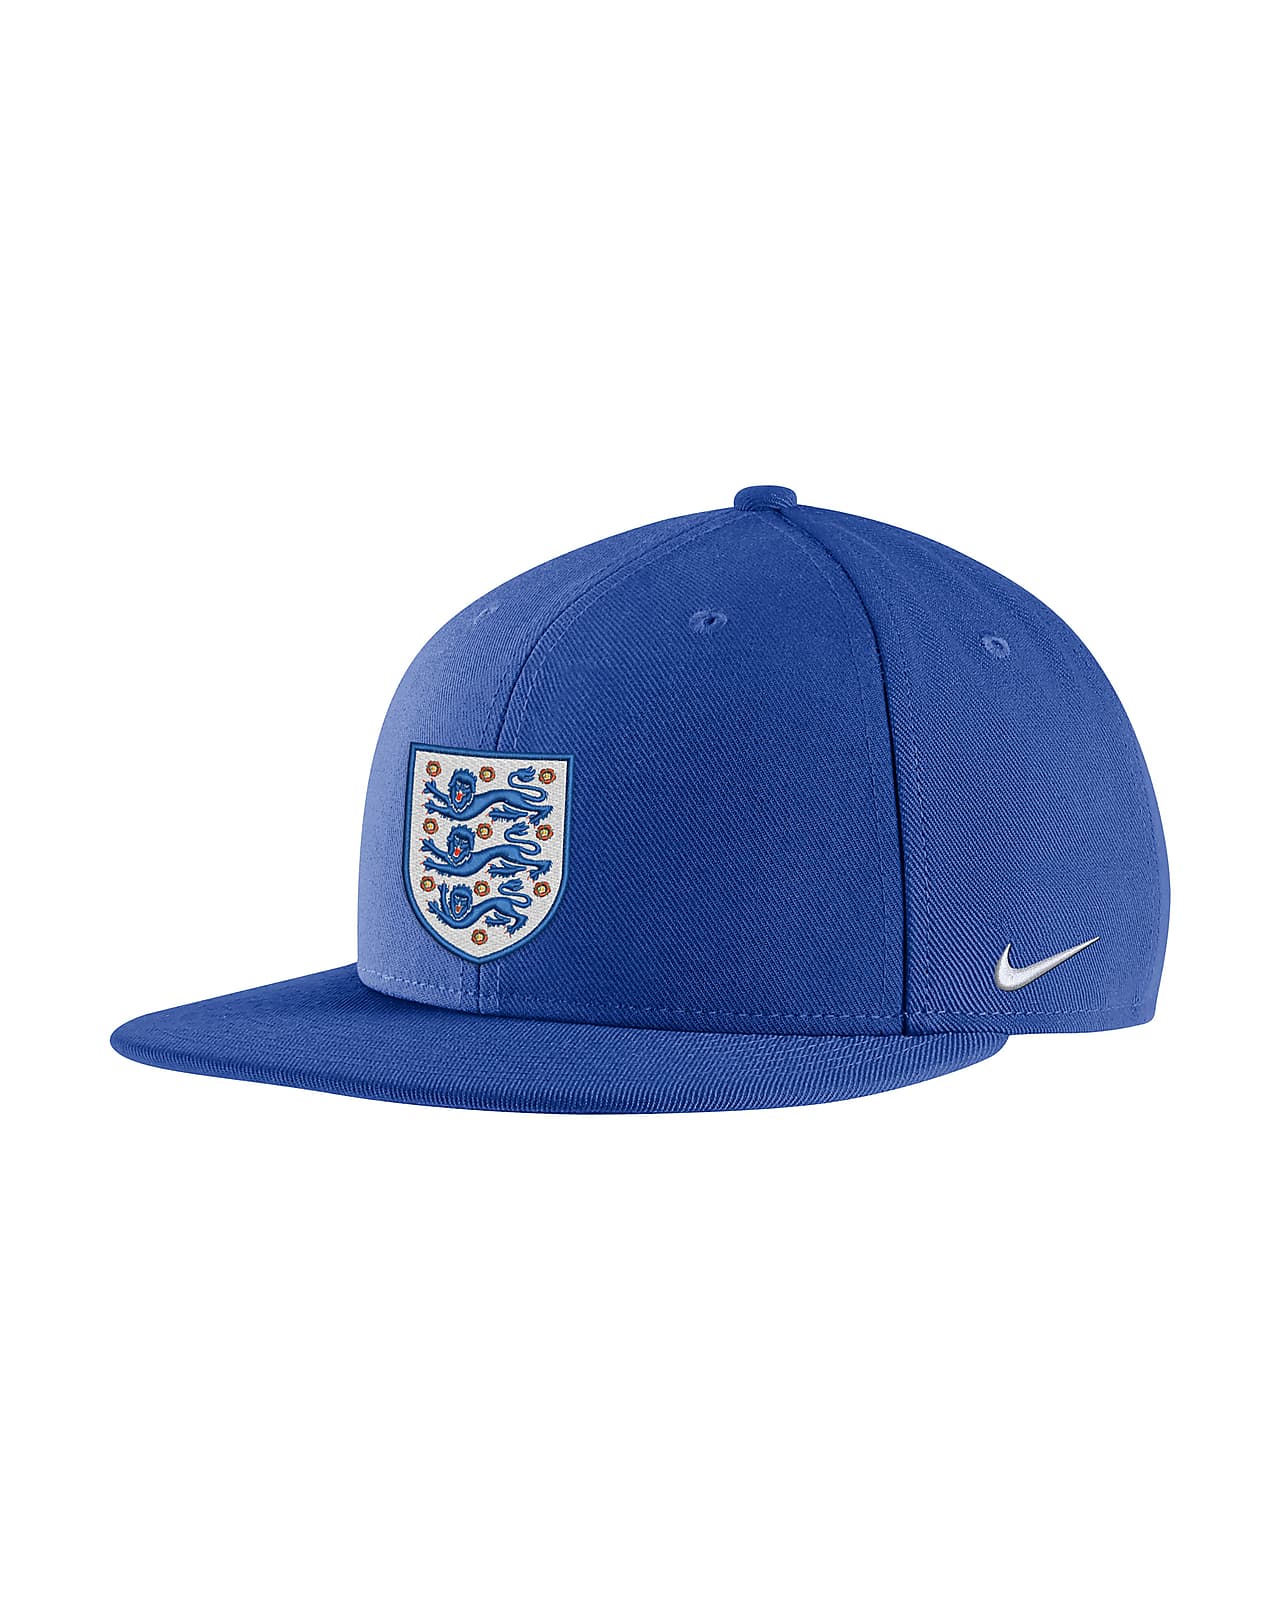 England Pro Big Kids' Snapback Hat